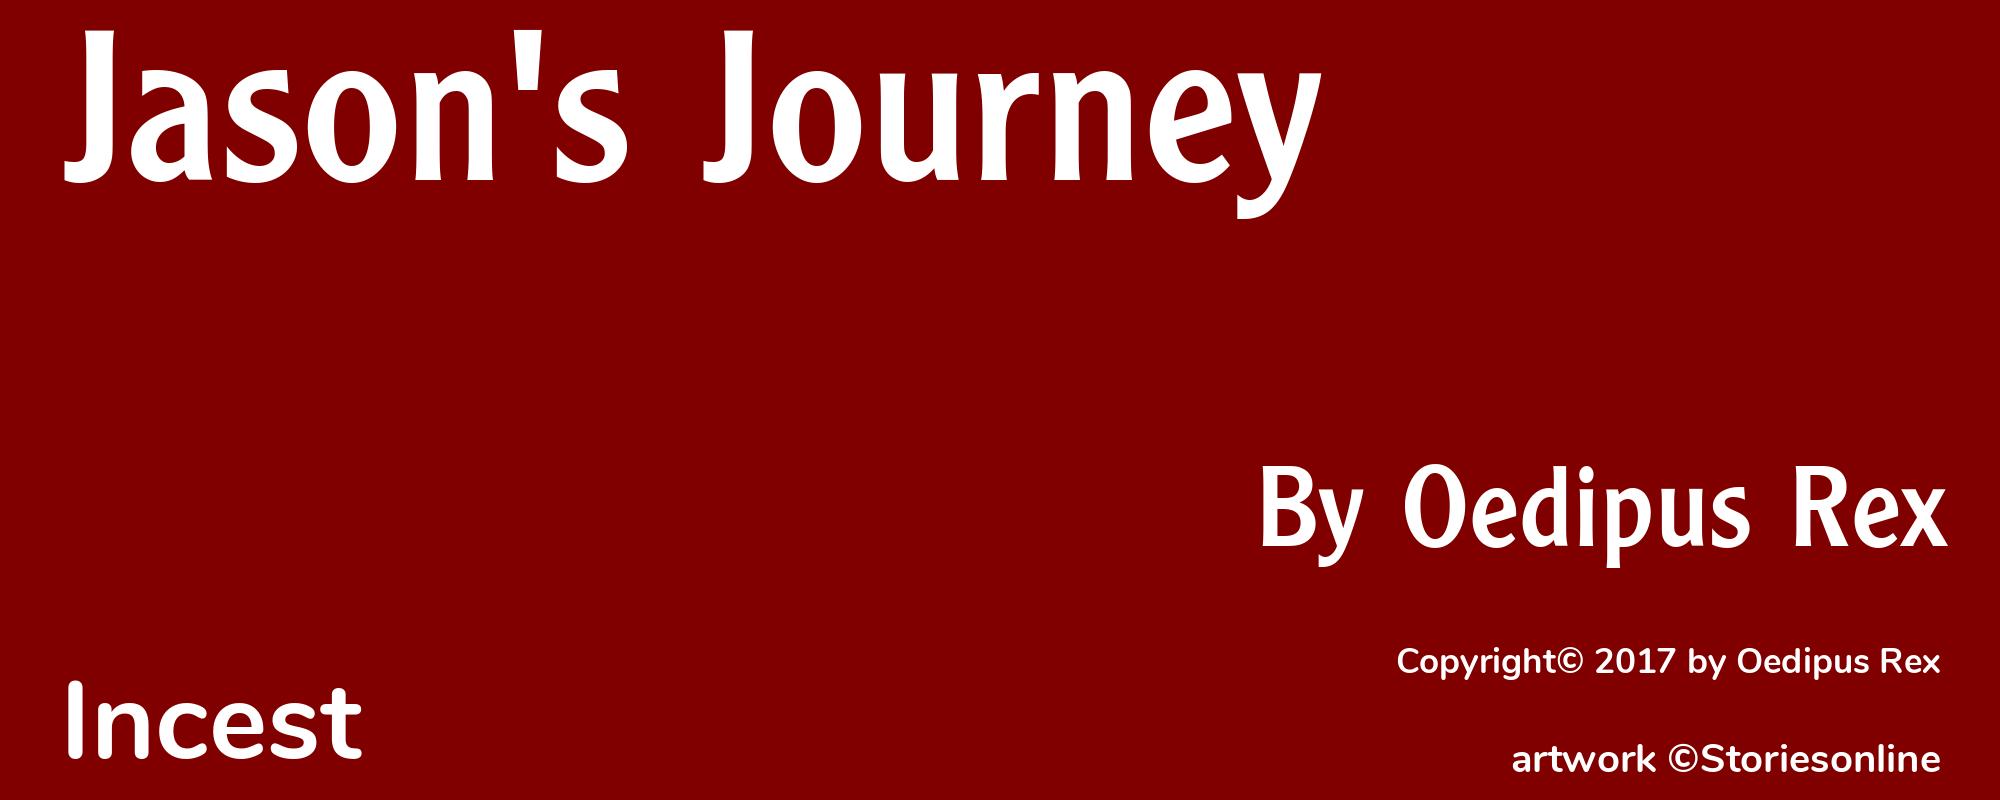 Jason's Journey - Cover